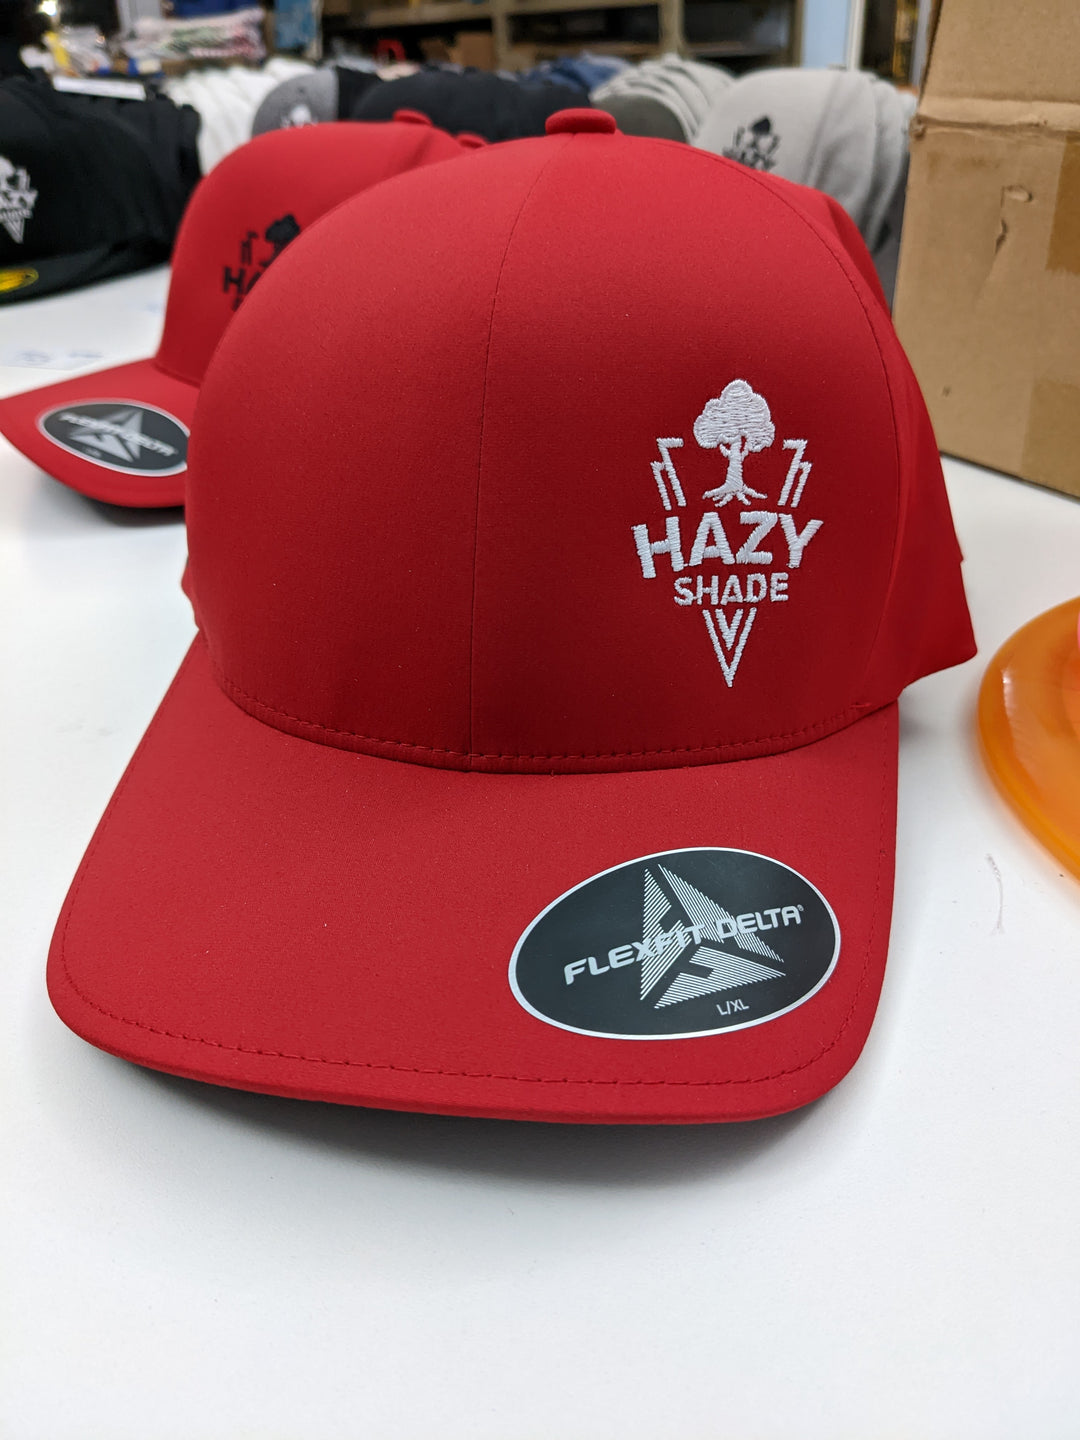 Hazy Shade Flexfit Delta L/XL Hat Triangle Red-White